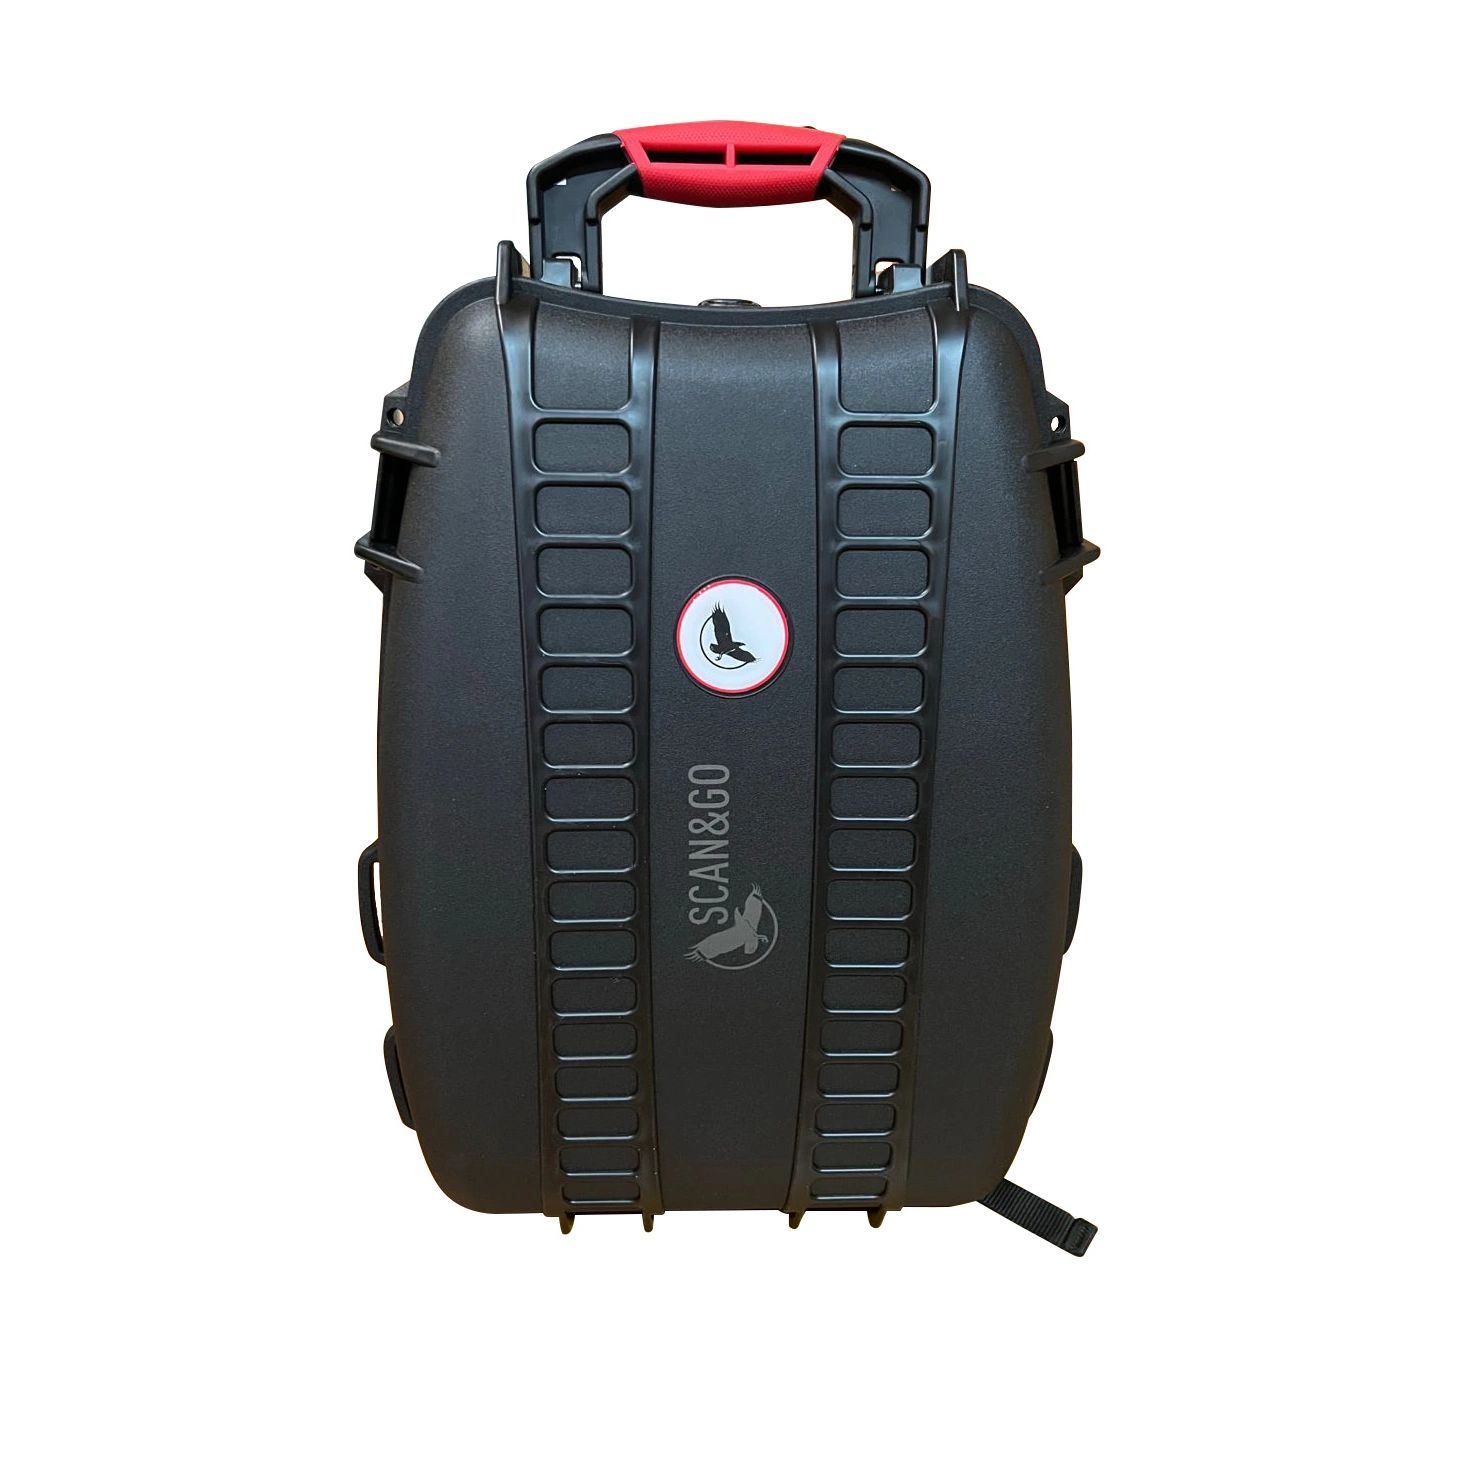 Scan & Go Backpack for Leica RTC360 Laser Scanner